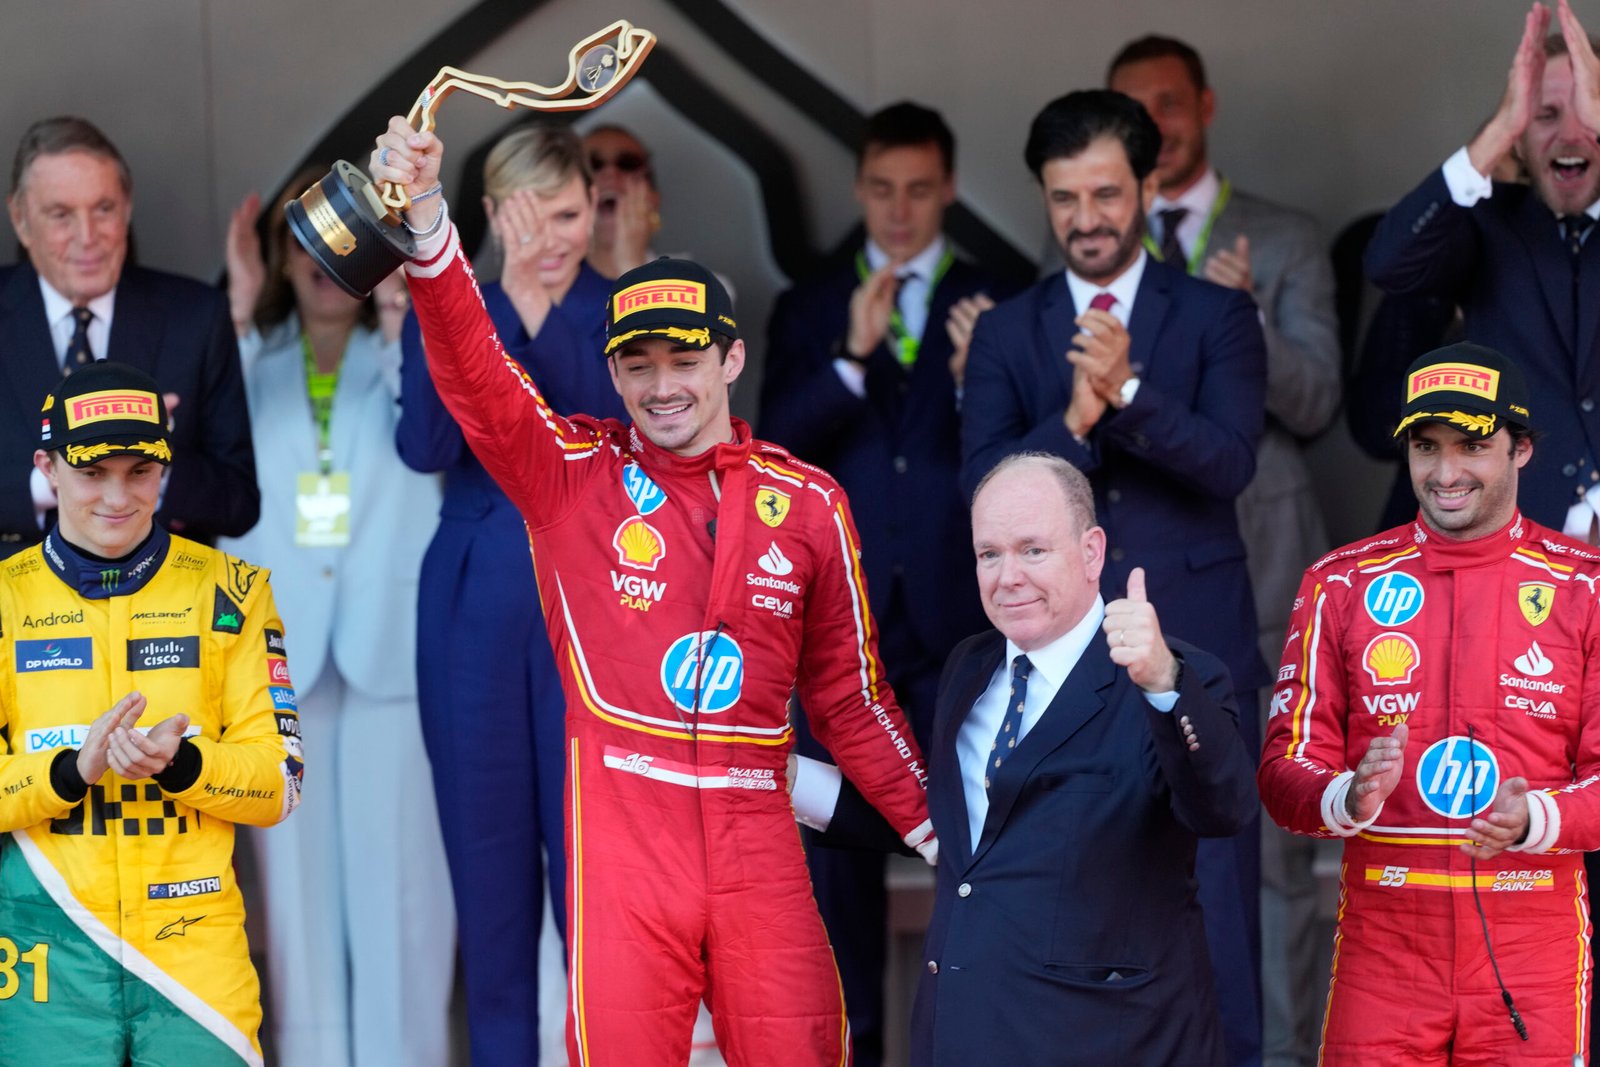 Ferrari’s Leclerc wins Monaco GP from pole position